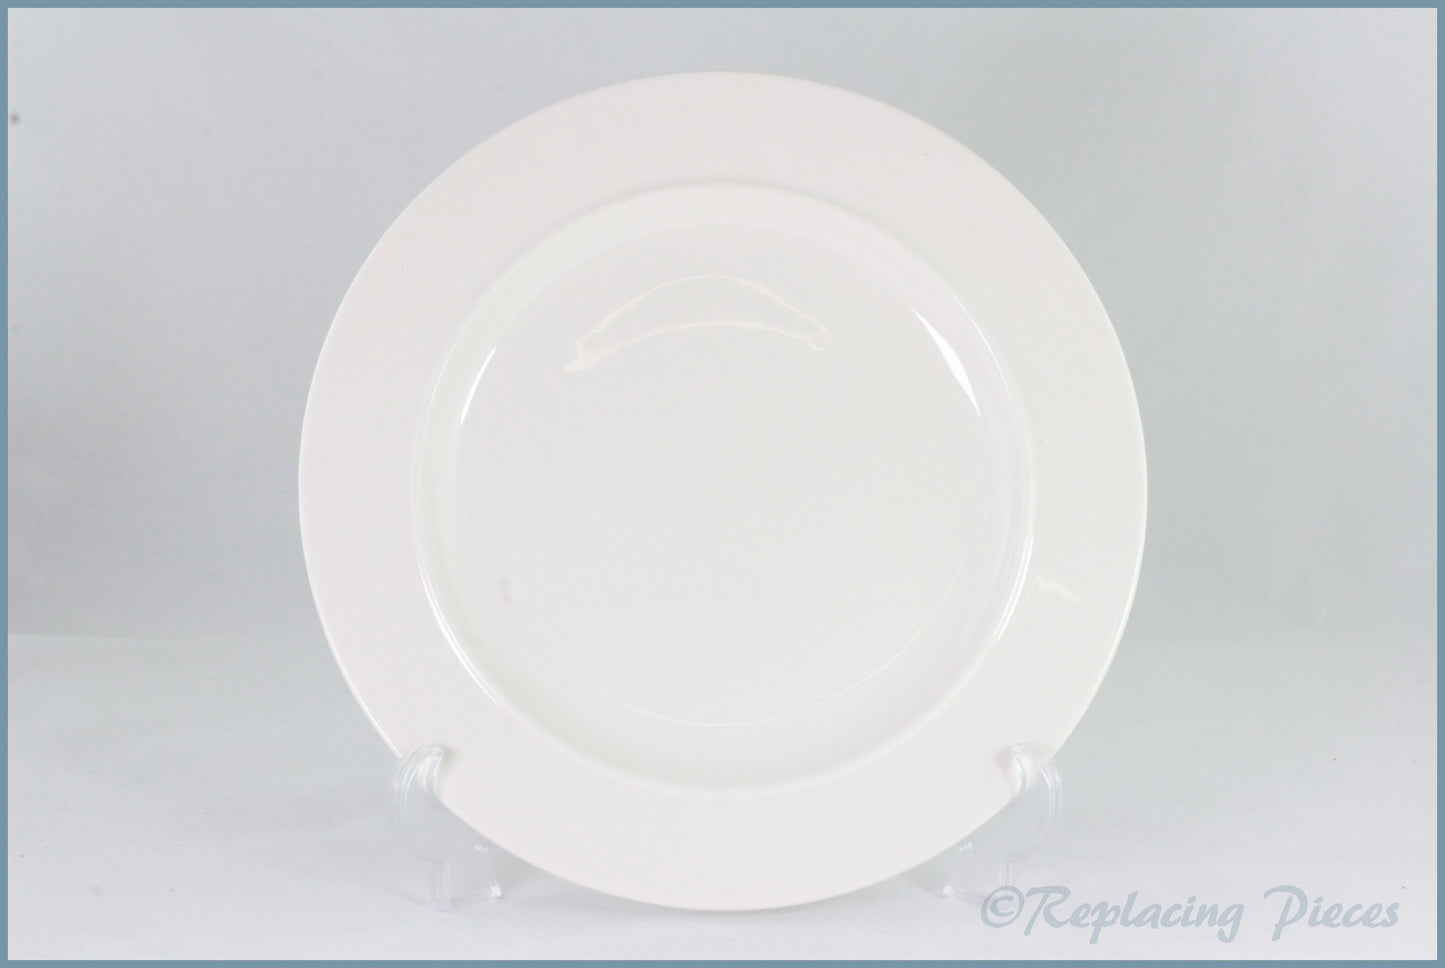 Alessi - La Bella Tavola - Dinner Plate